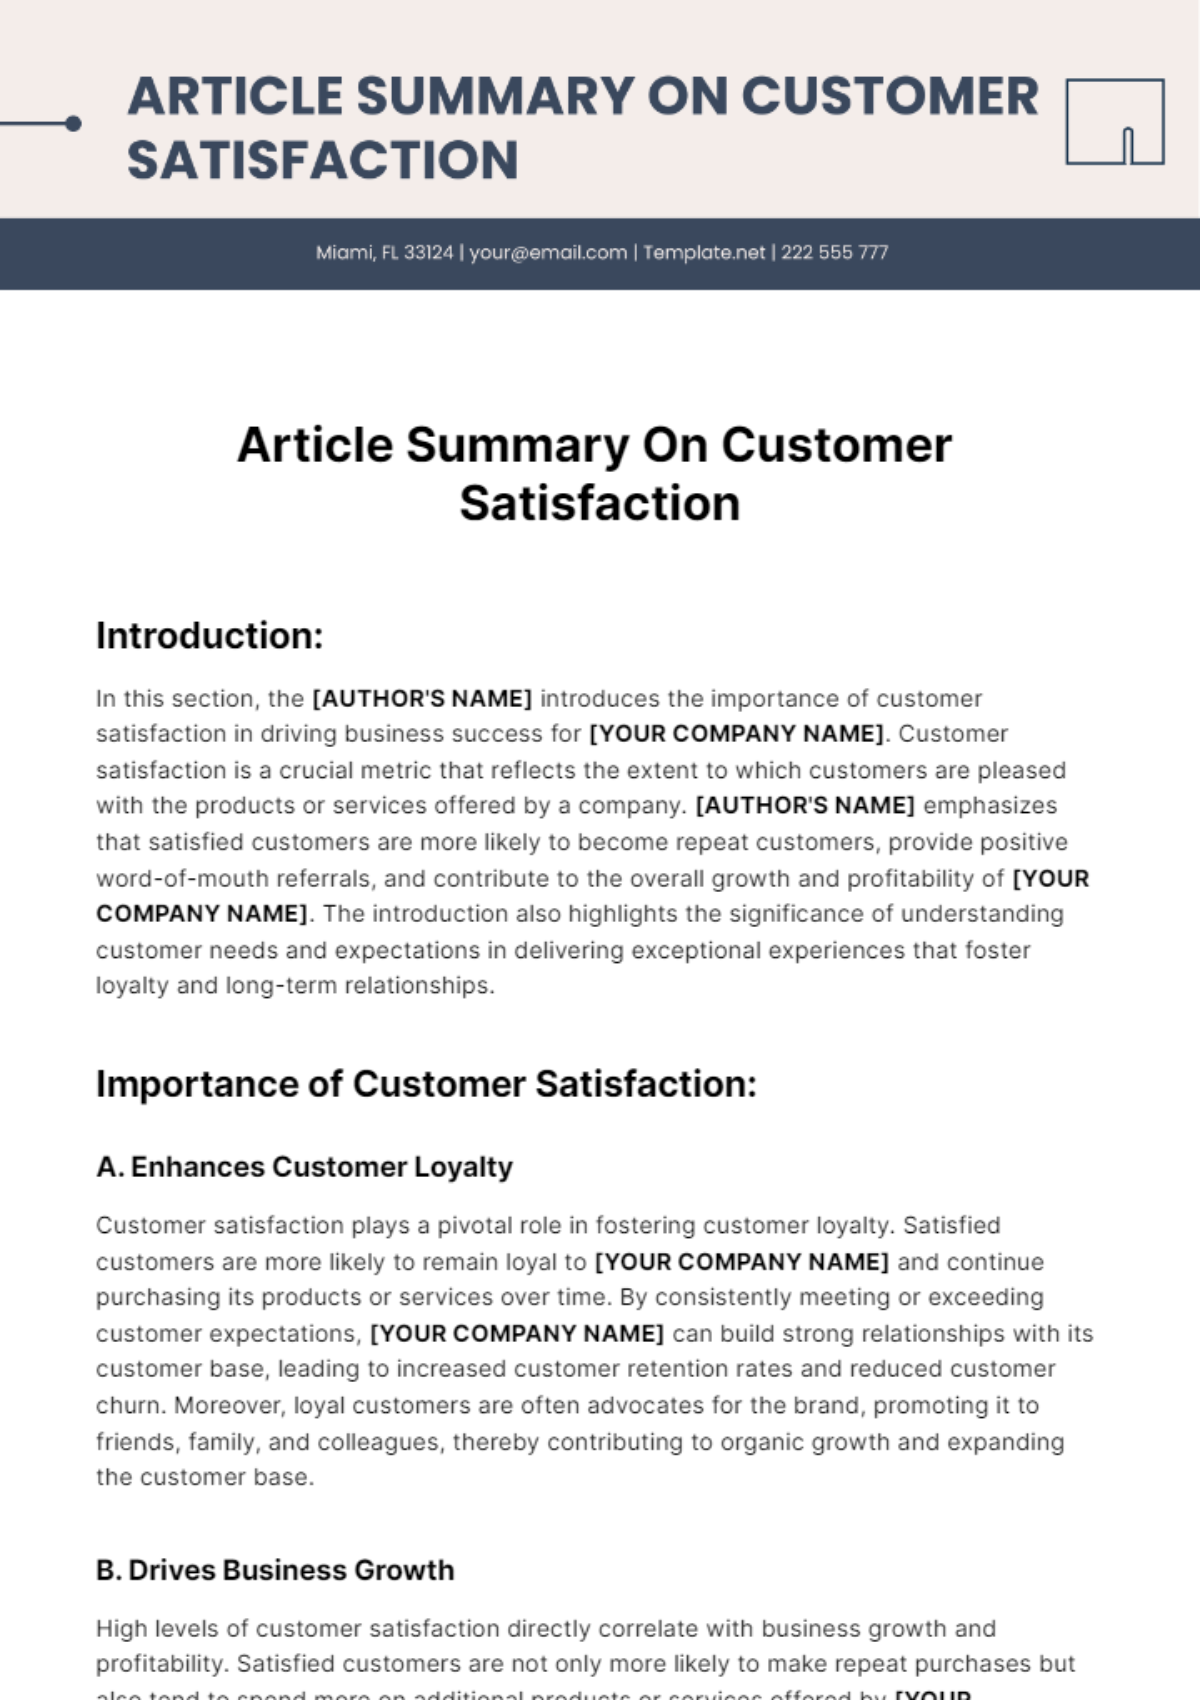 Article Summary On Customer Satisfaction Template